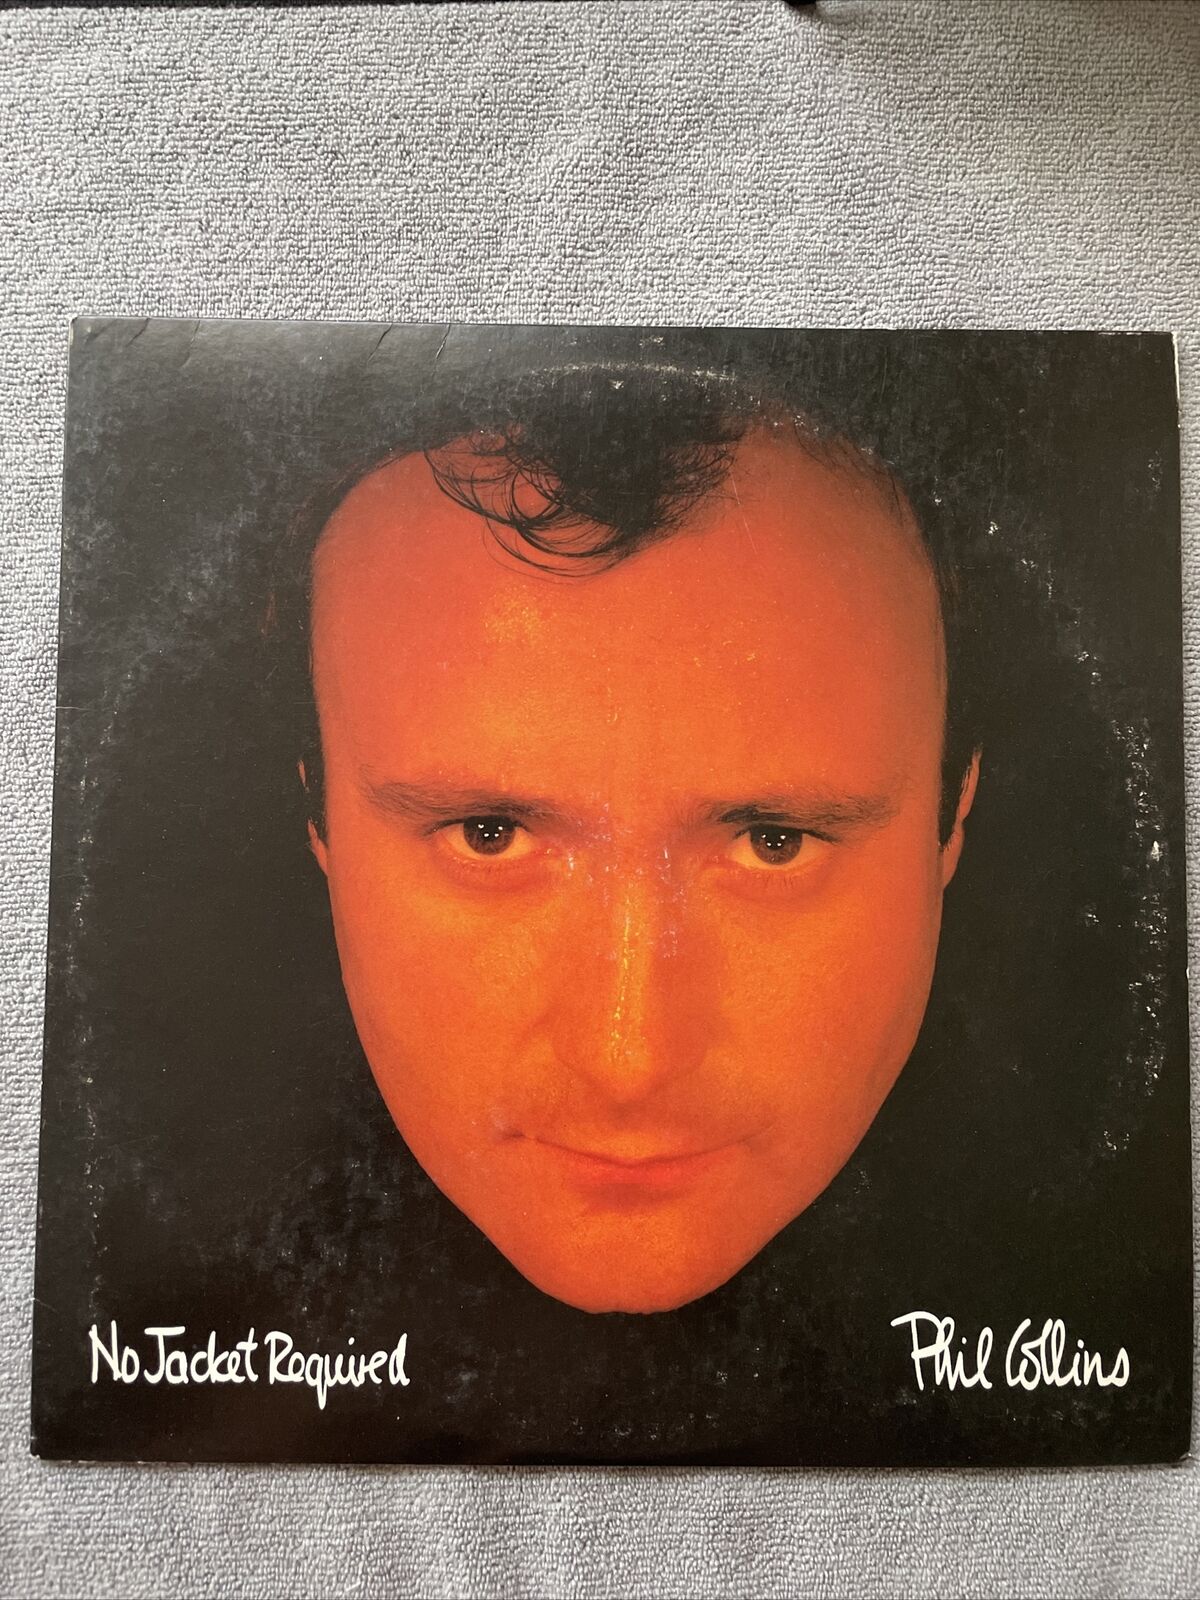 Phil Collins No Jacket Required  1985  Vinyl LP Album Atlantic Record 81240-1